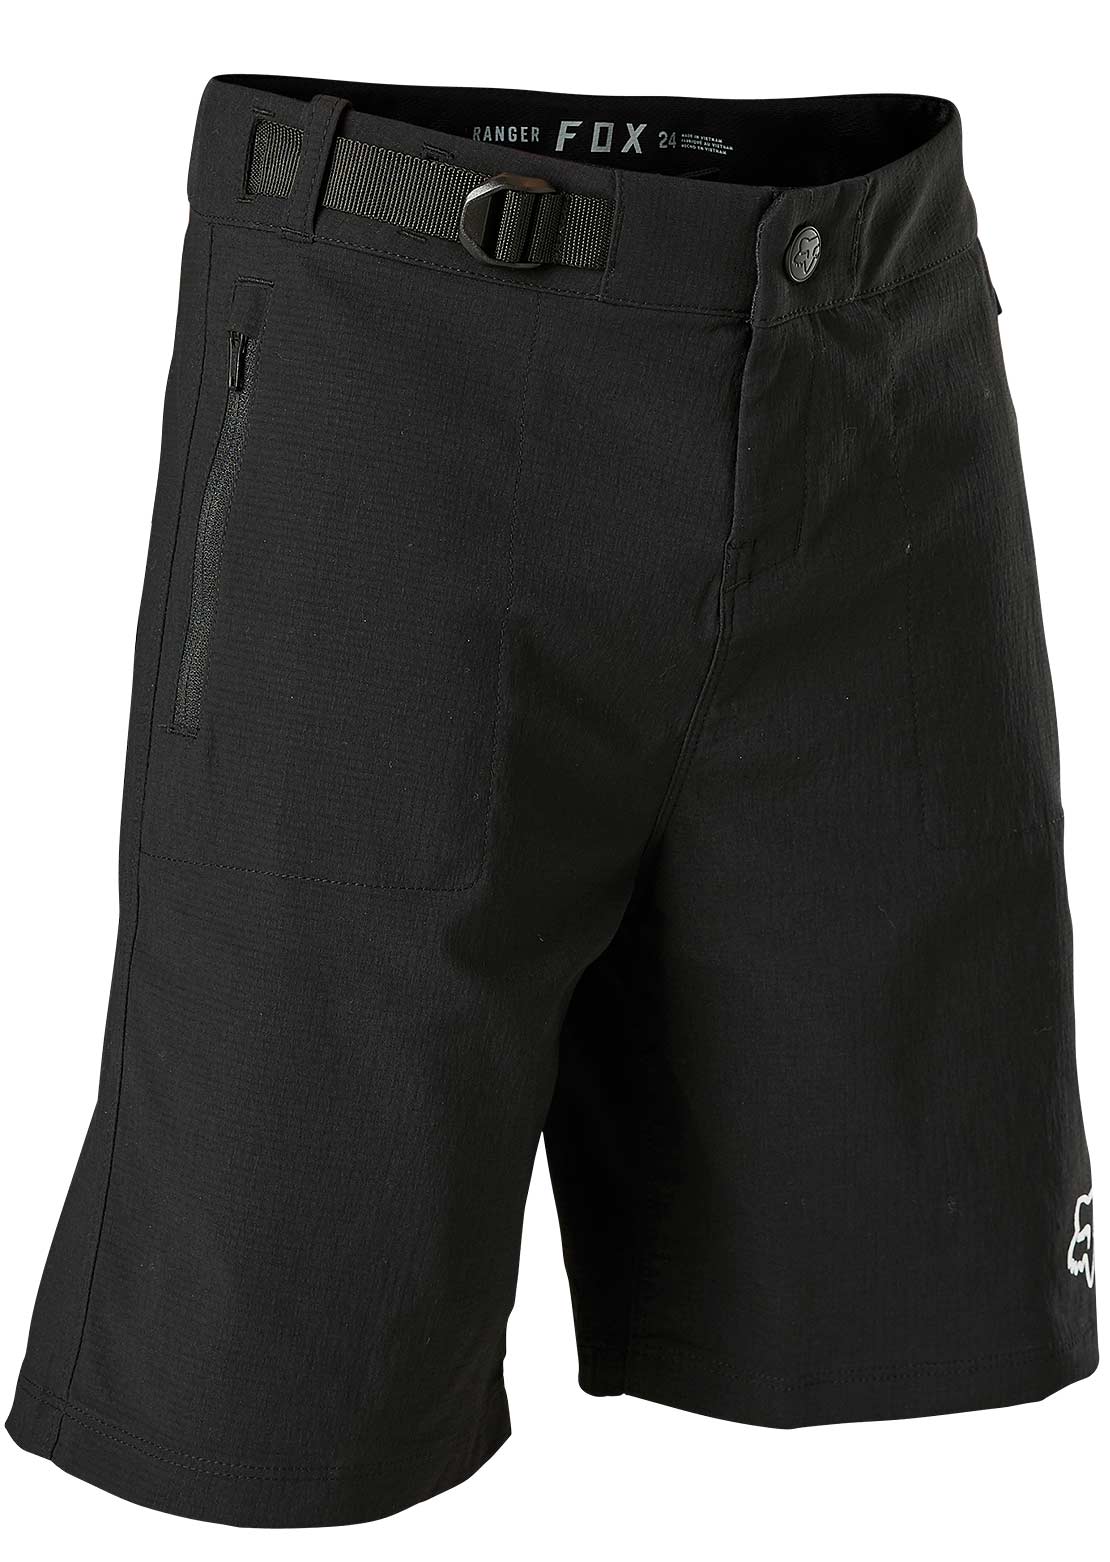 Fox Junior Ranger Mountain Bike Shorts With Liner Black